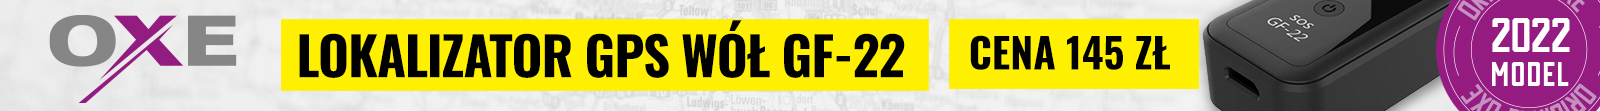 OXE GF-22 – lokalizator GPS